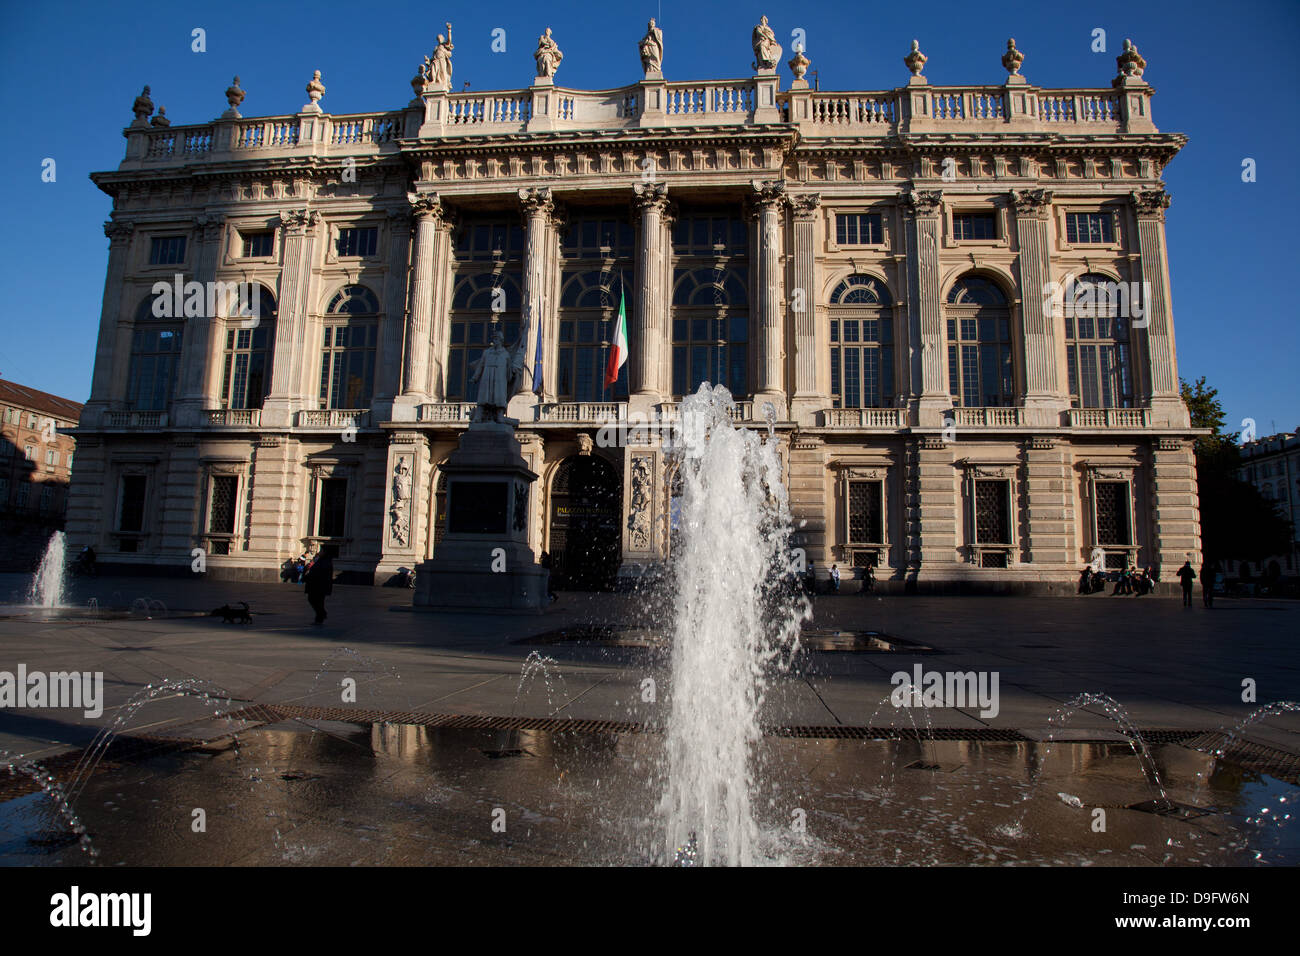 Palazzo Madama, first Senate of the Italian Kingdom, now housing Turin's Museo Civico d'Arte Antica, Turin, Piedmont, Italy Stock Photo